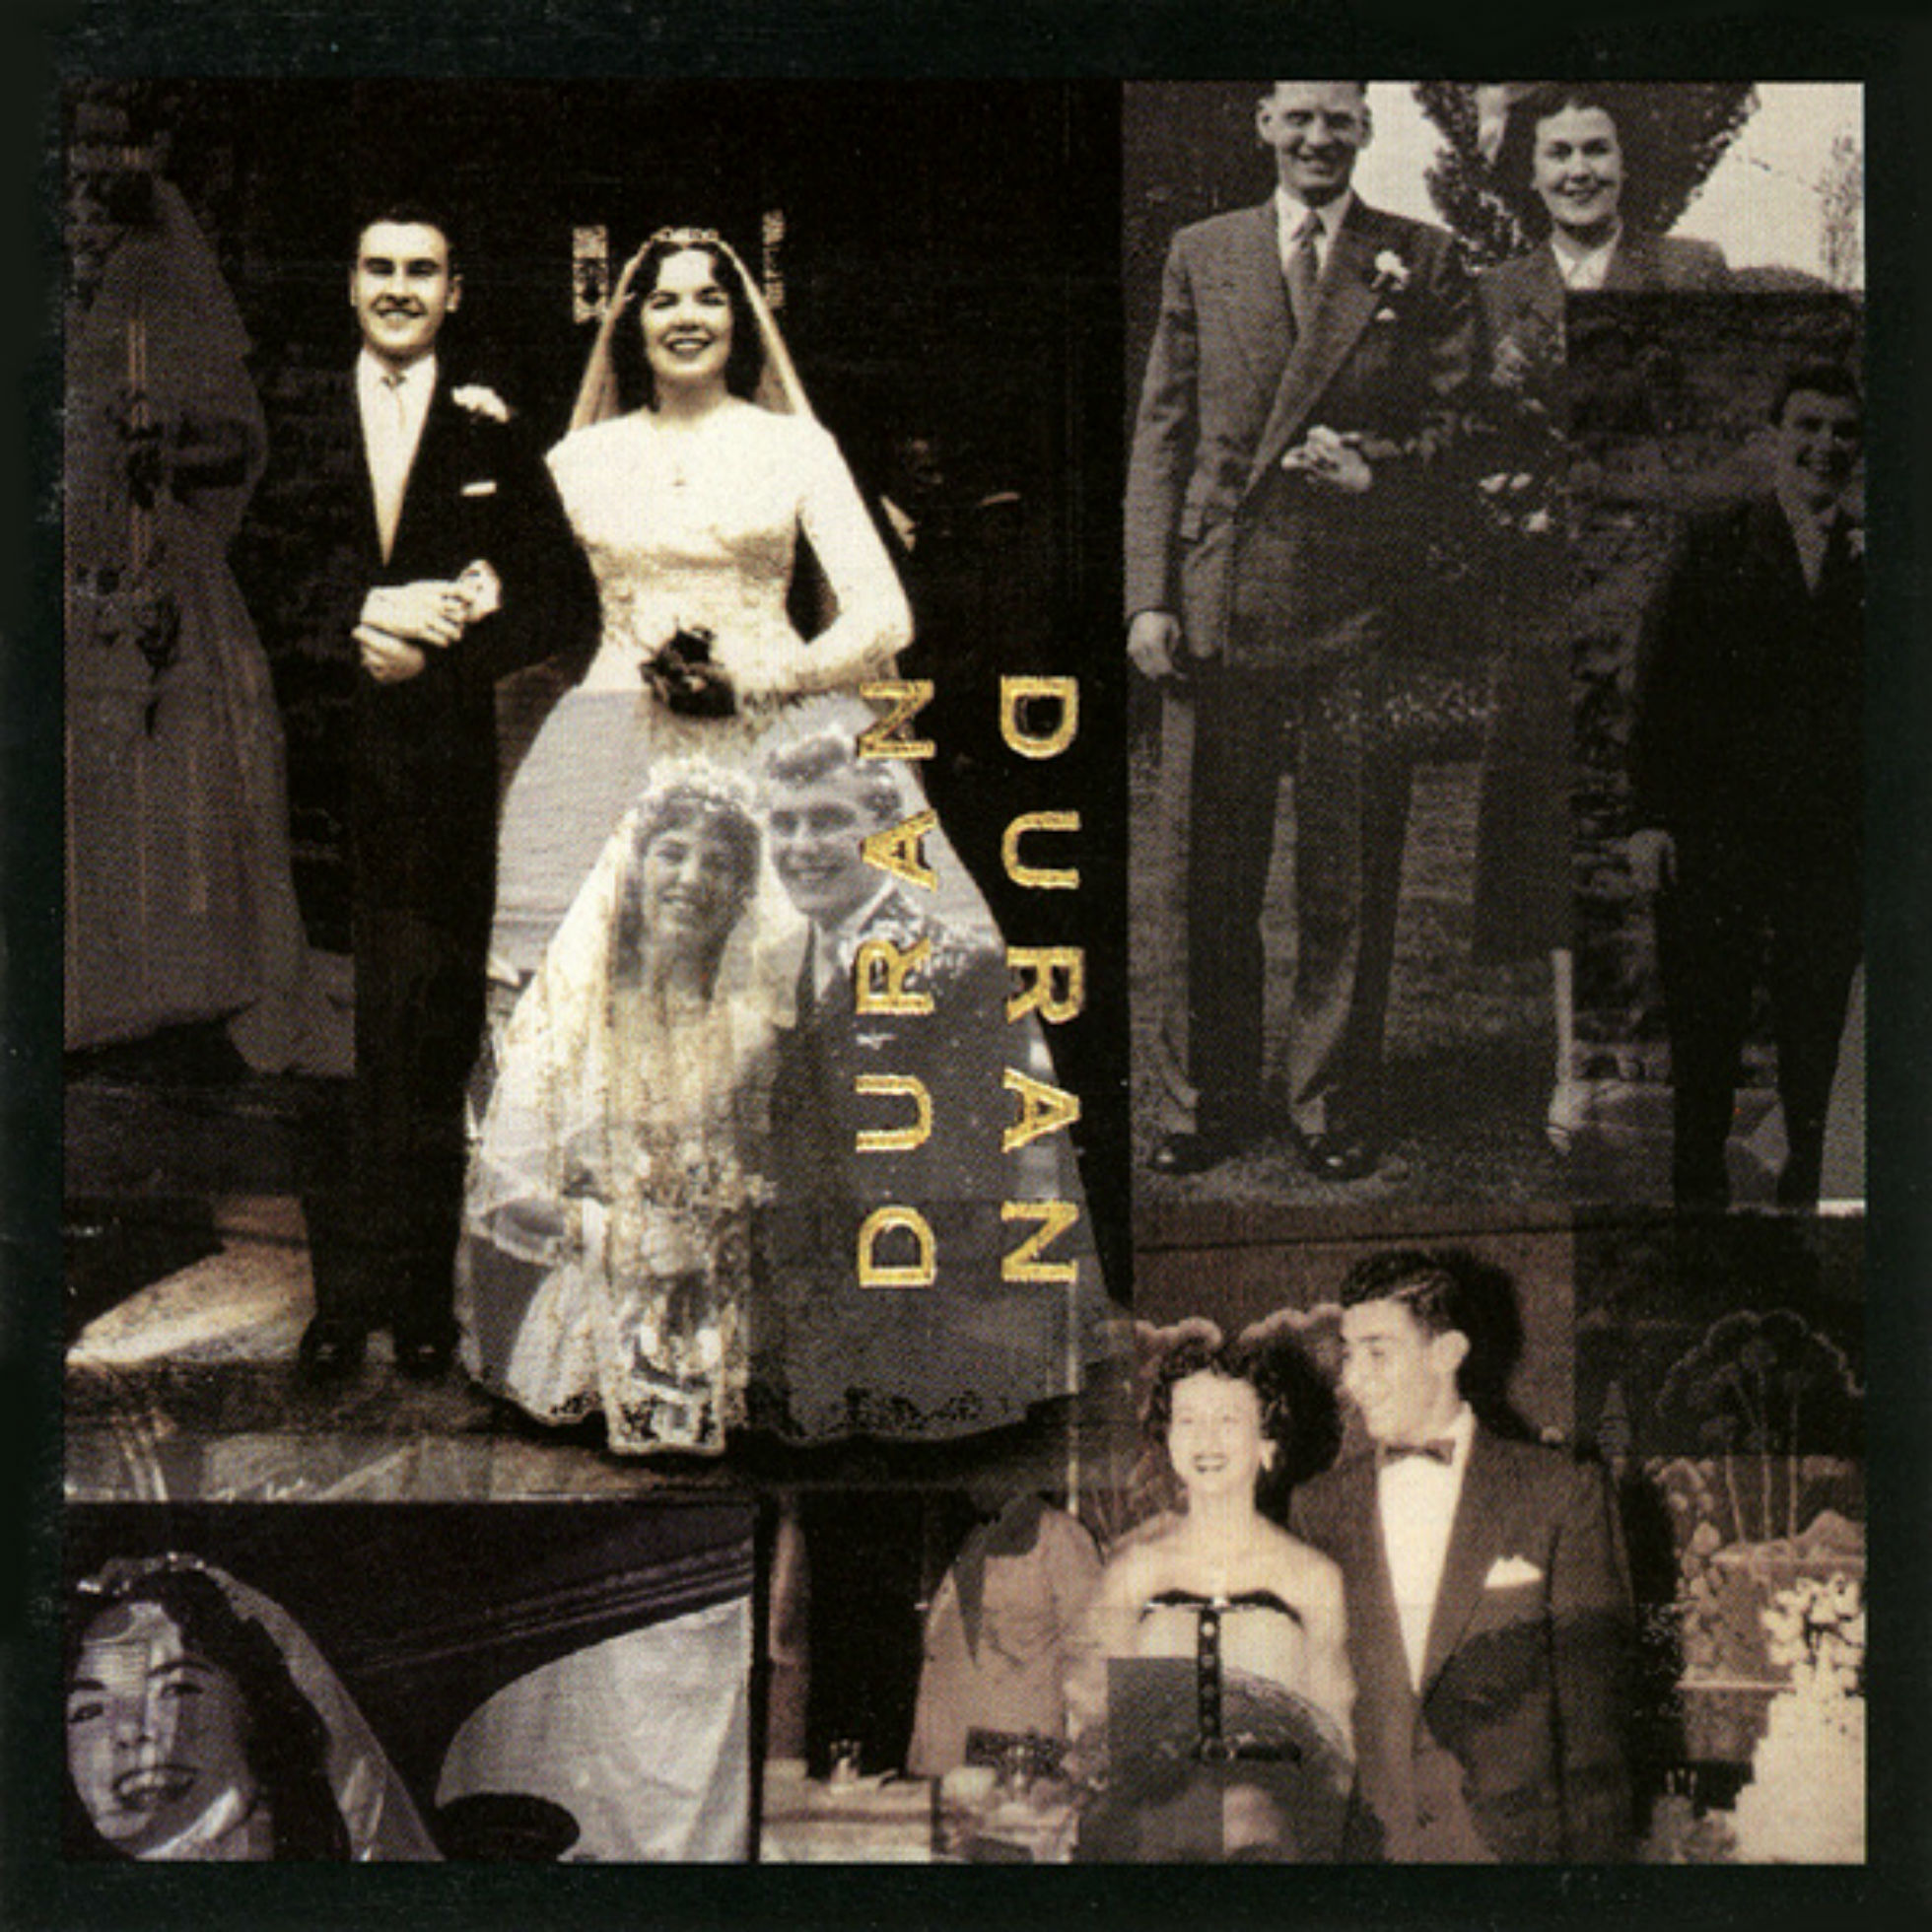 DURAN DURAN (THE WEDDING ALBUM) (1993), DURAN DURAN - NotodoesIndie